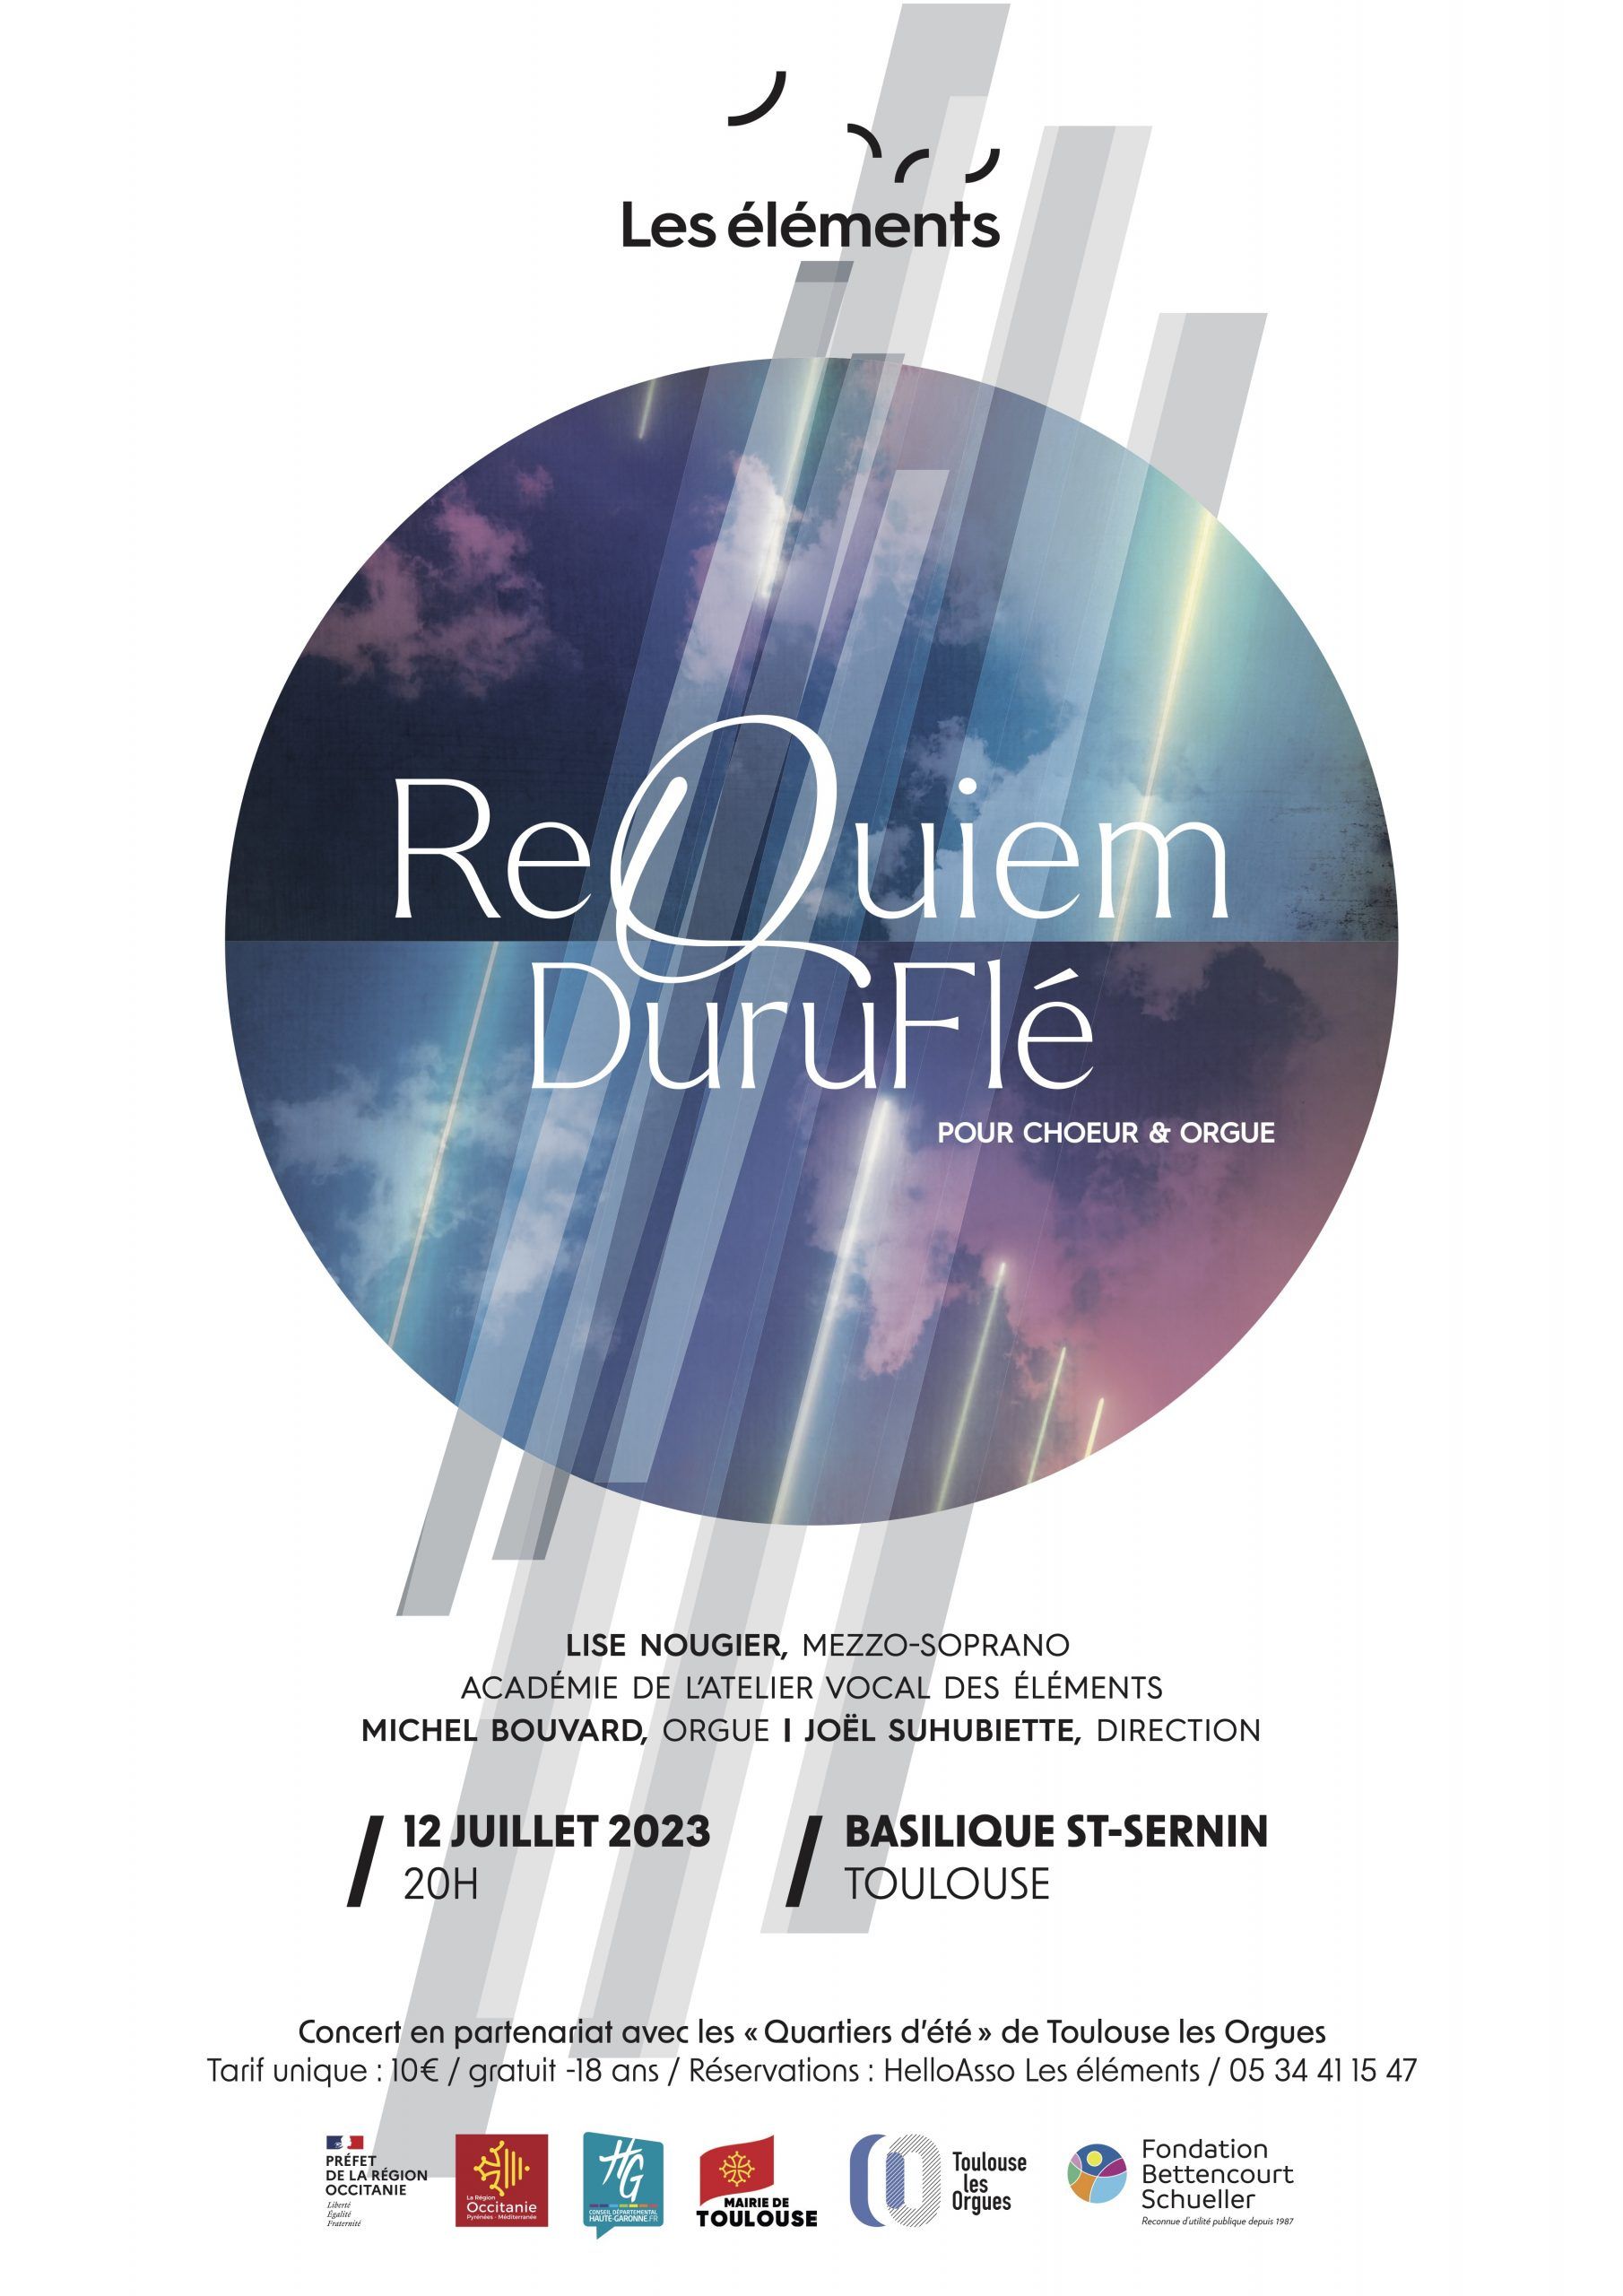 Les éléments - Requiem Duruflé